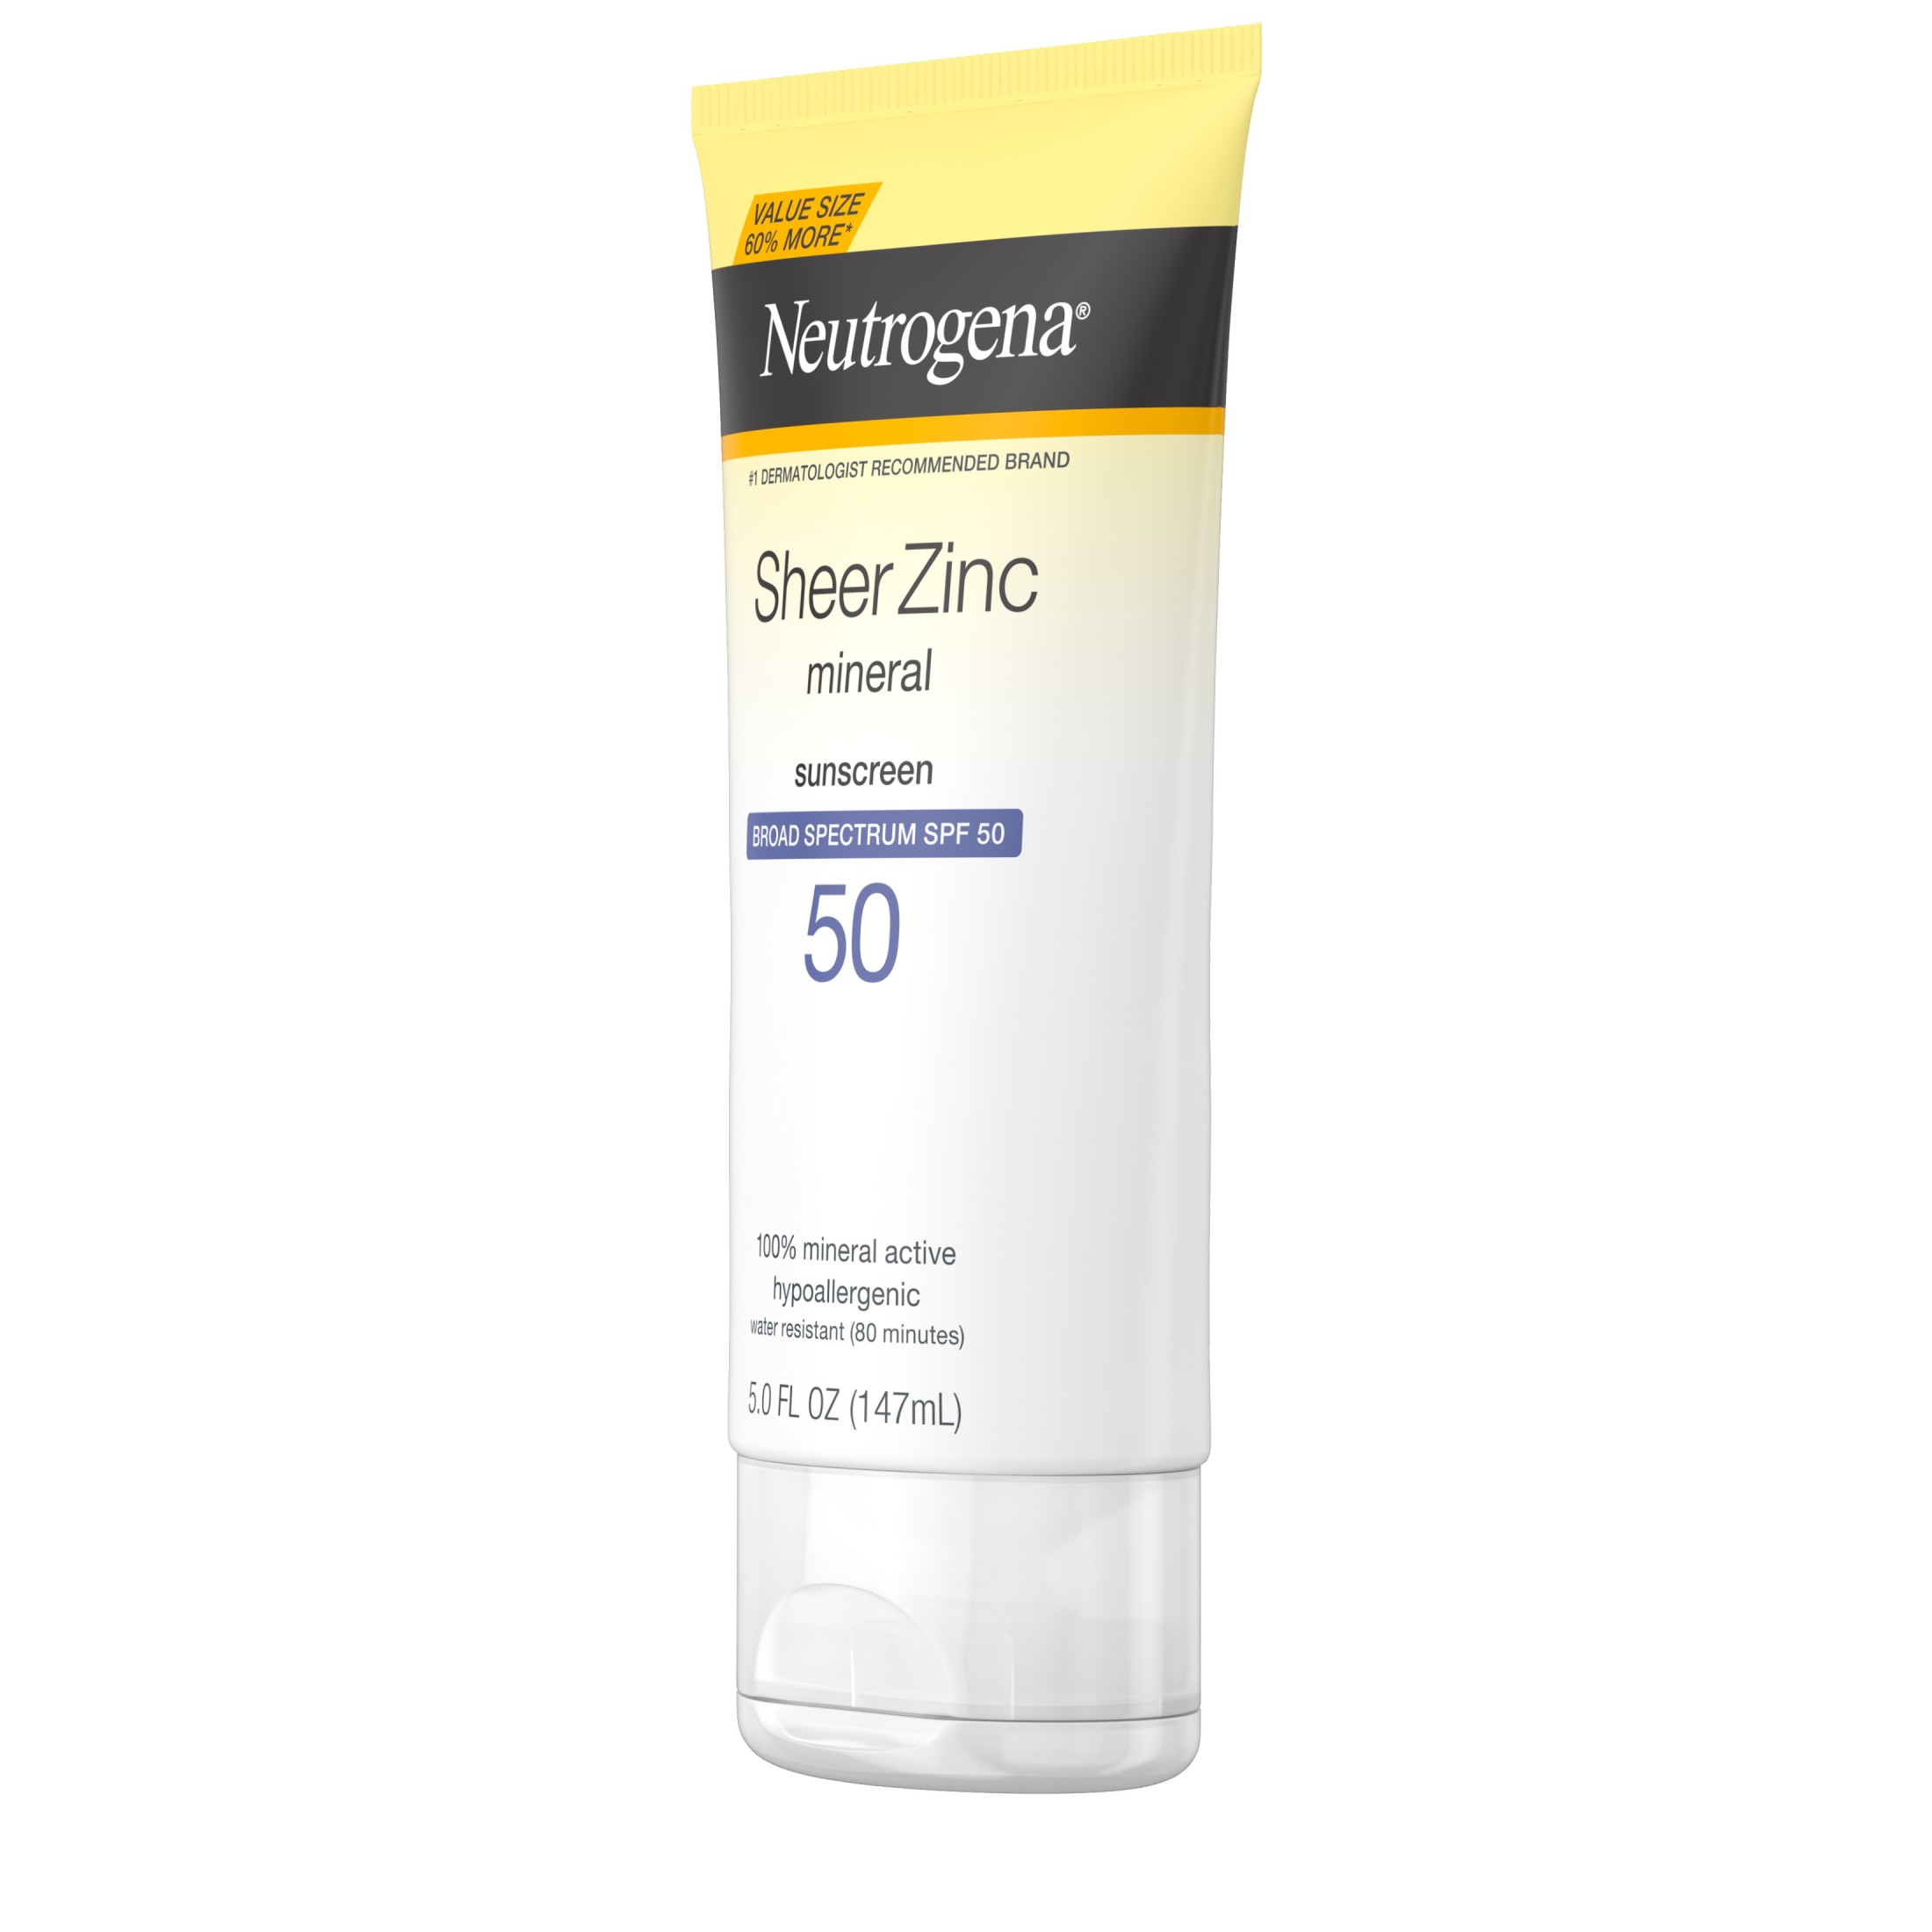 Neutrogena Sheer Zinc Sunscreen Lotion SPF 50, Value-Size, 5 fl. oz - image 5 of 9